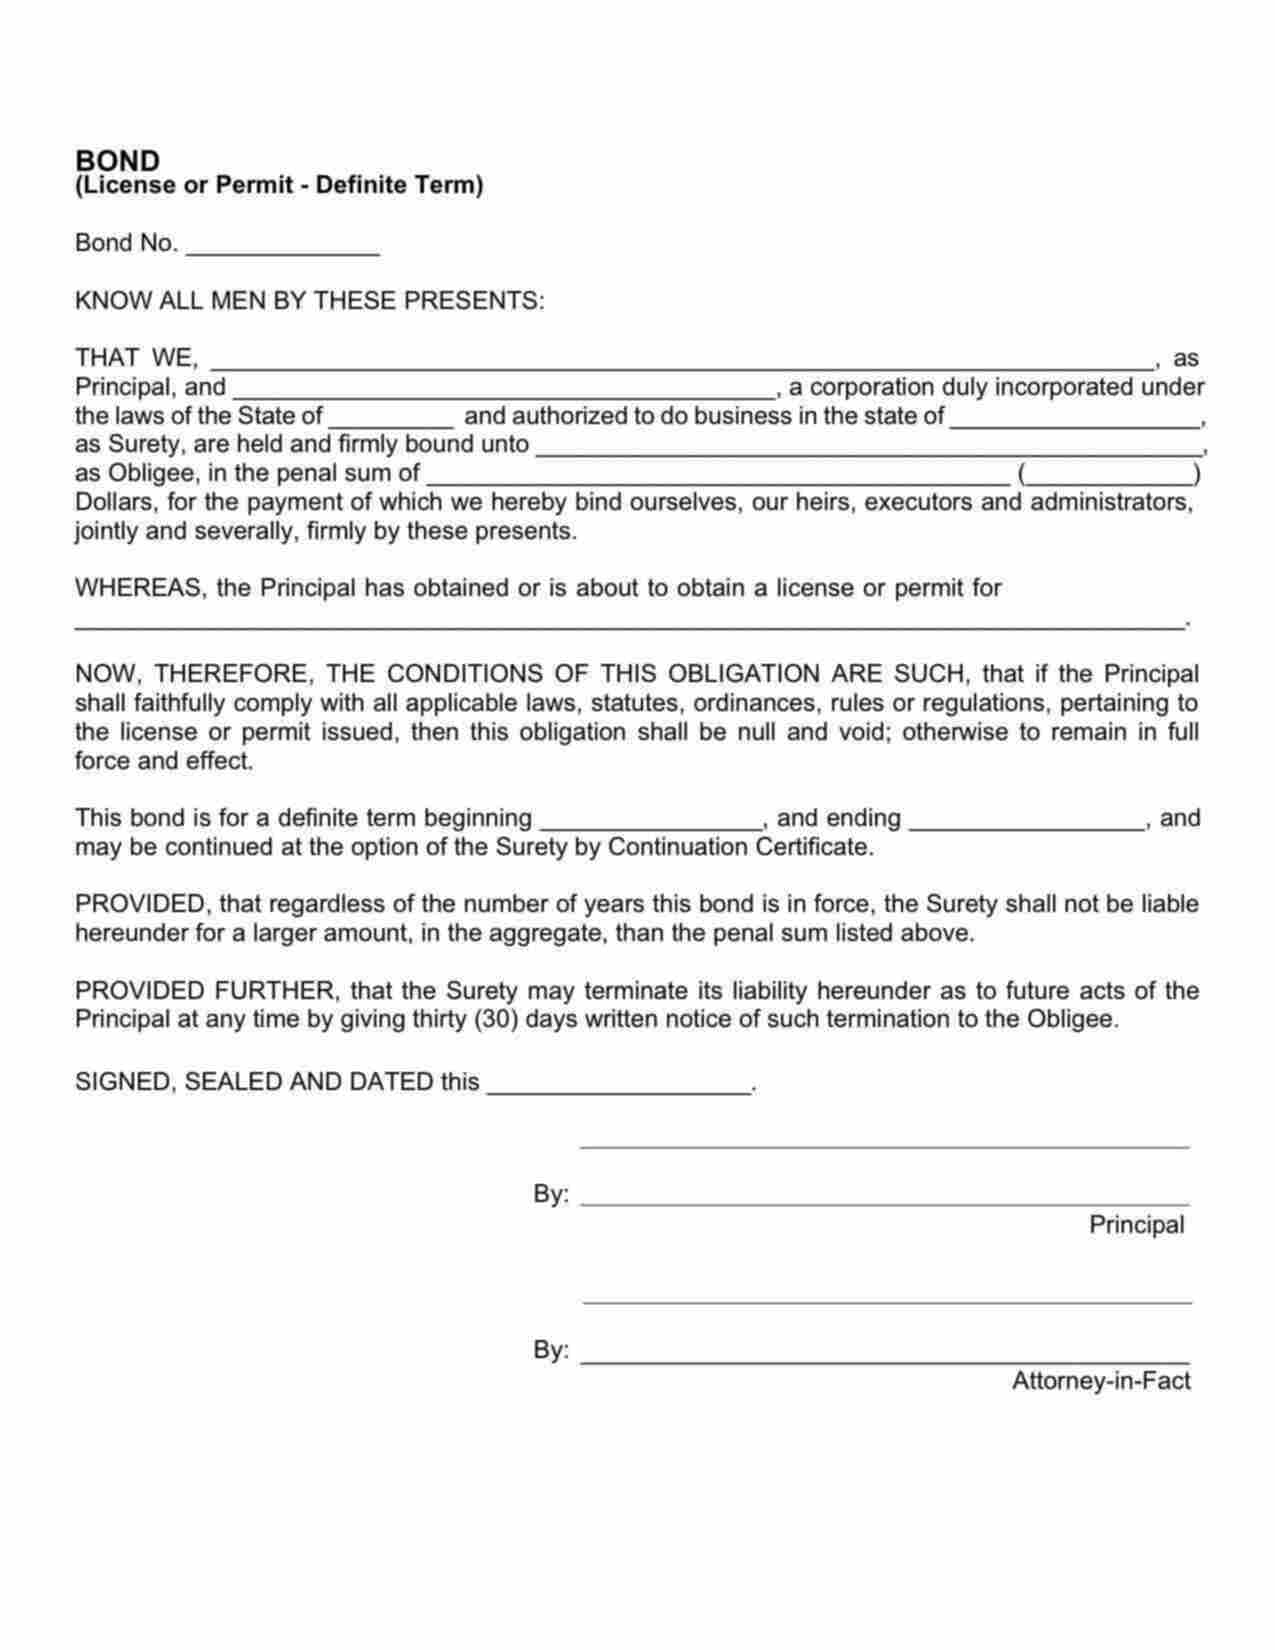 Iowa License/Permit Bond Form